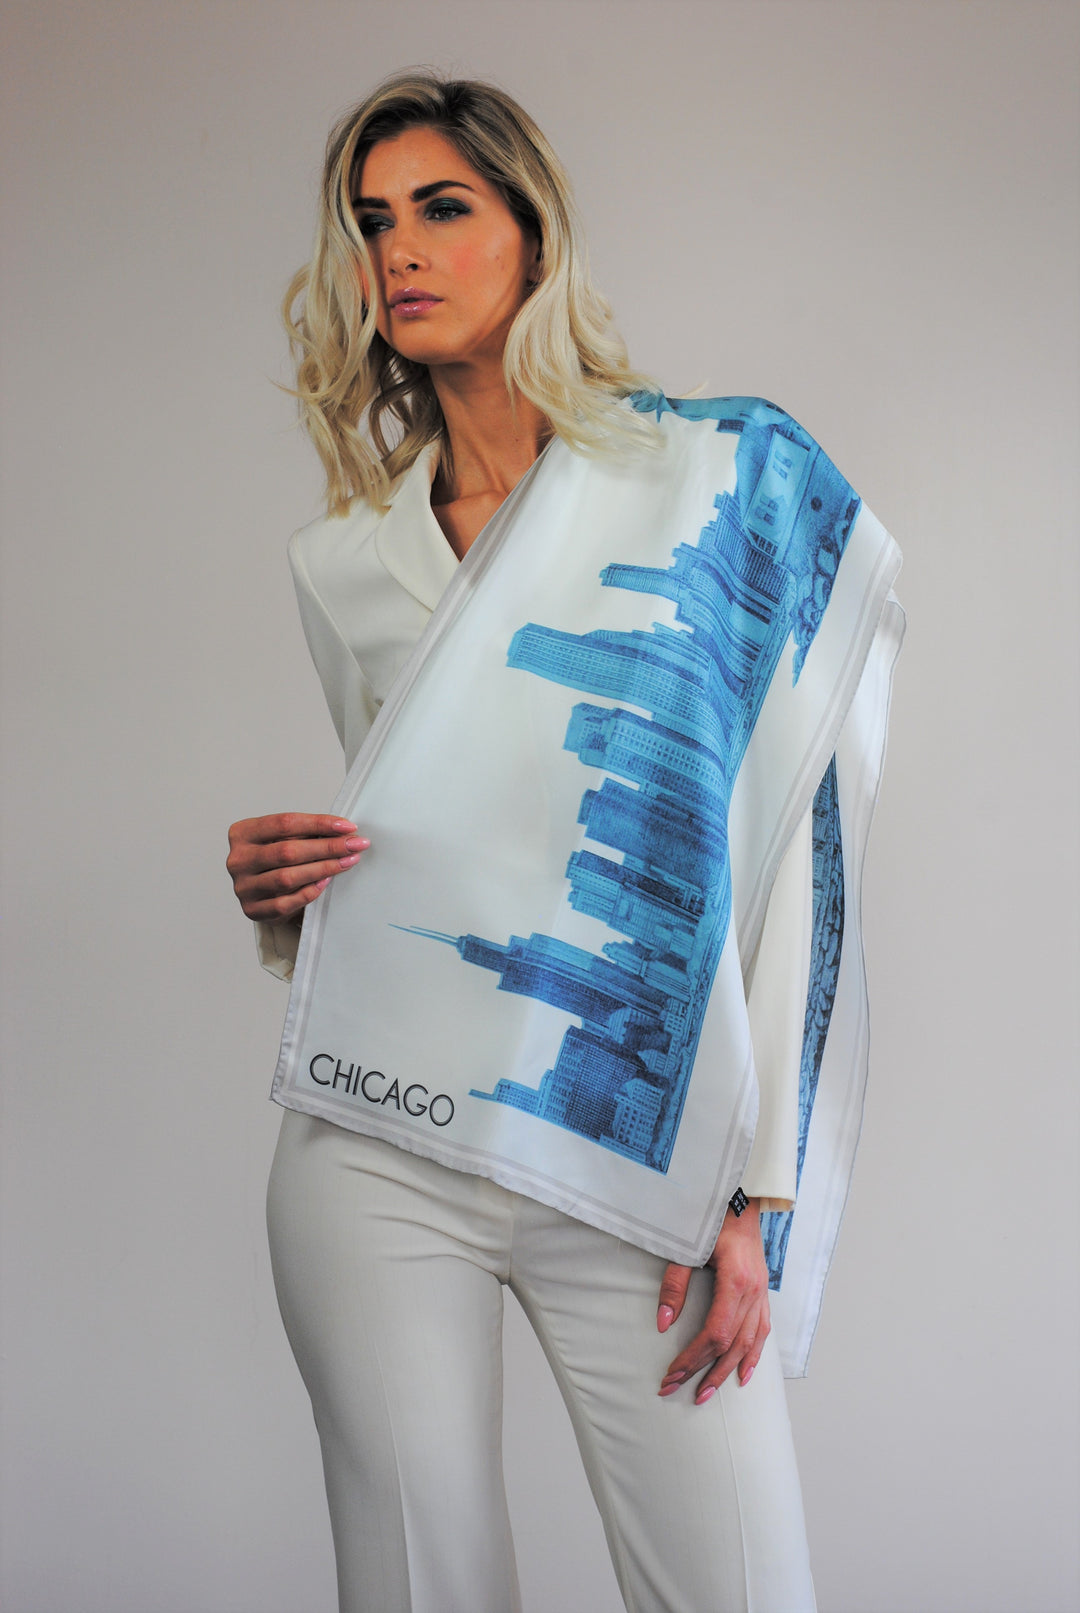 Best Chicago Skyline Art Gift Wearable Art Souvenir Chicago History Pure Silk Scarf by Fashion Designer Alesia C. White Blue